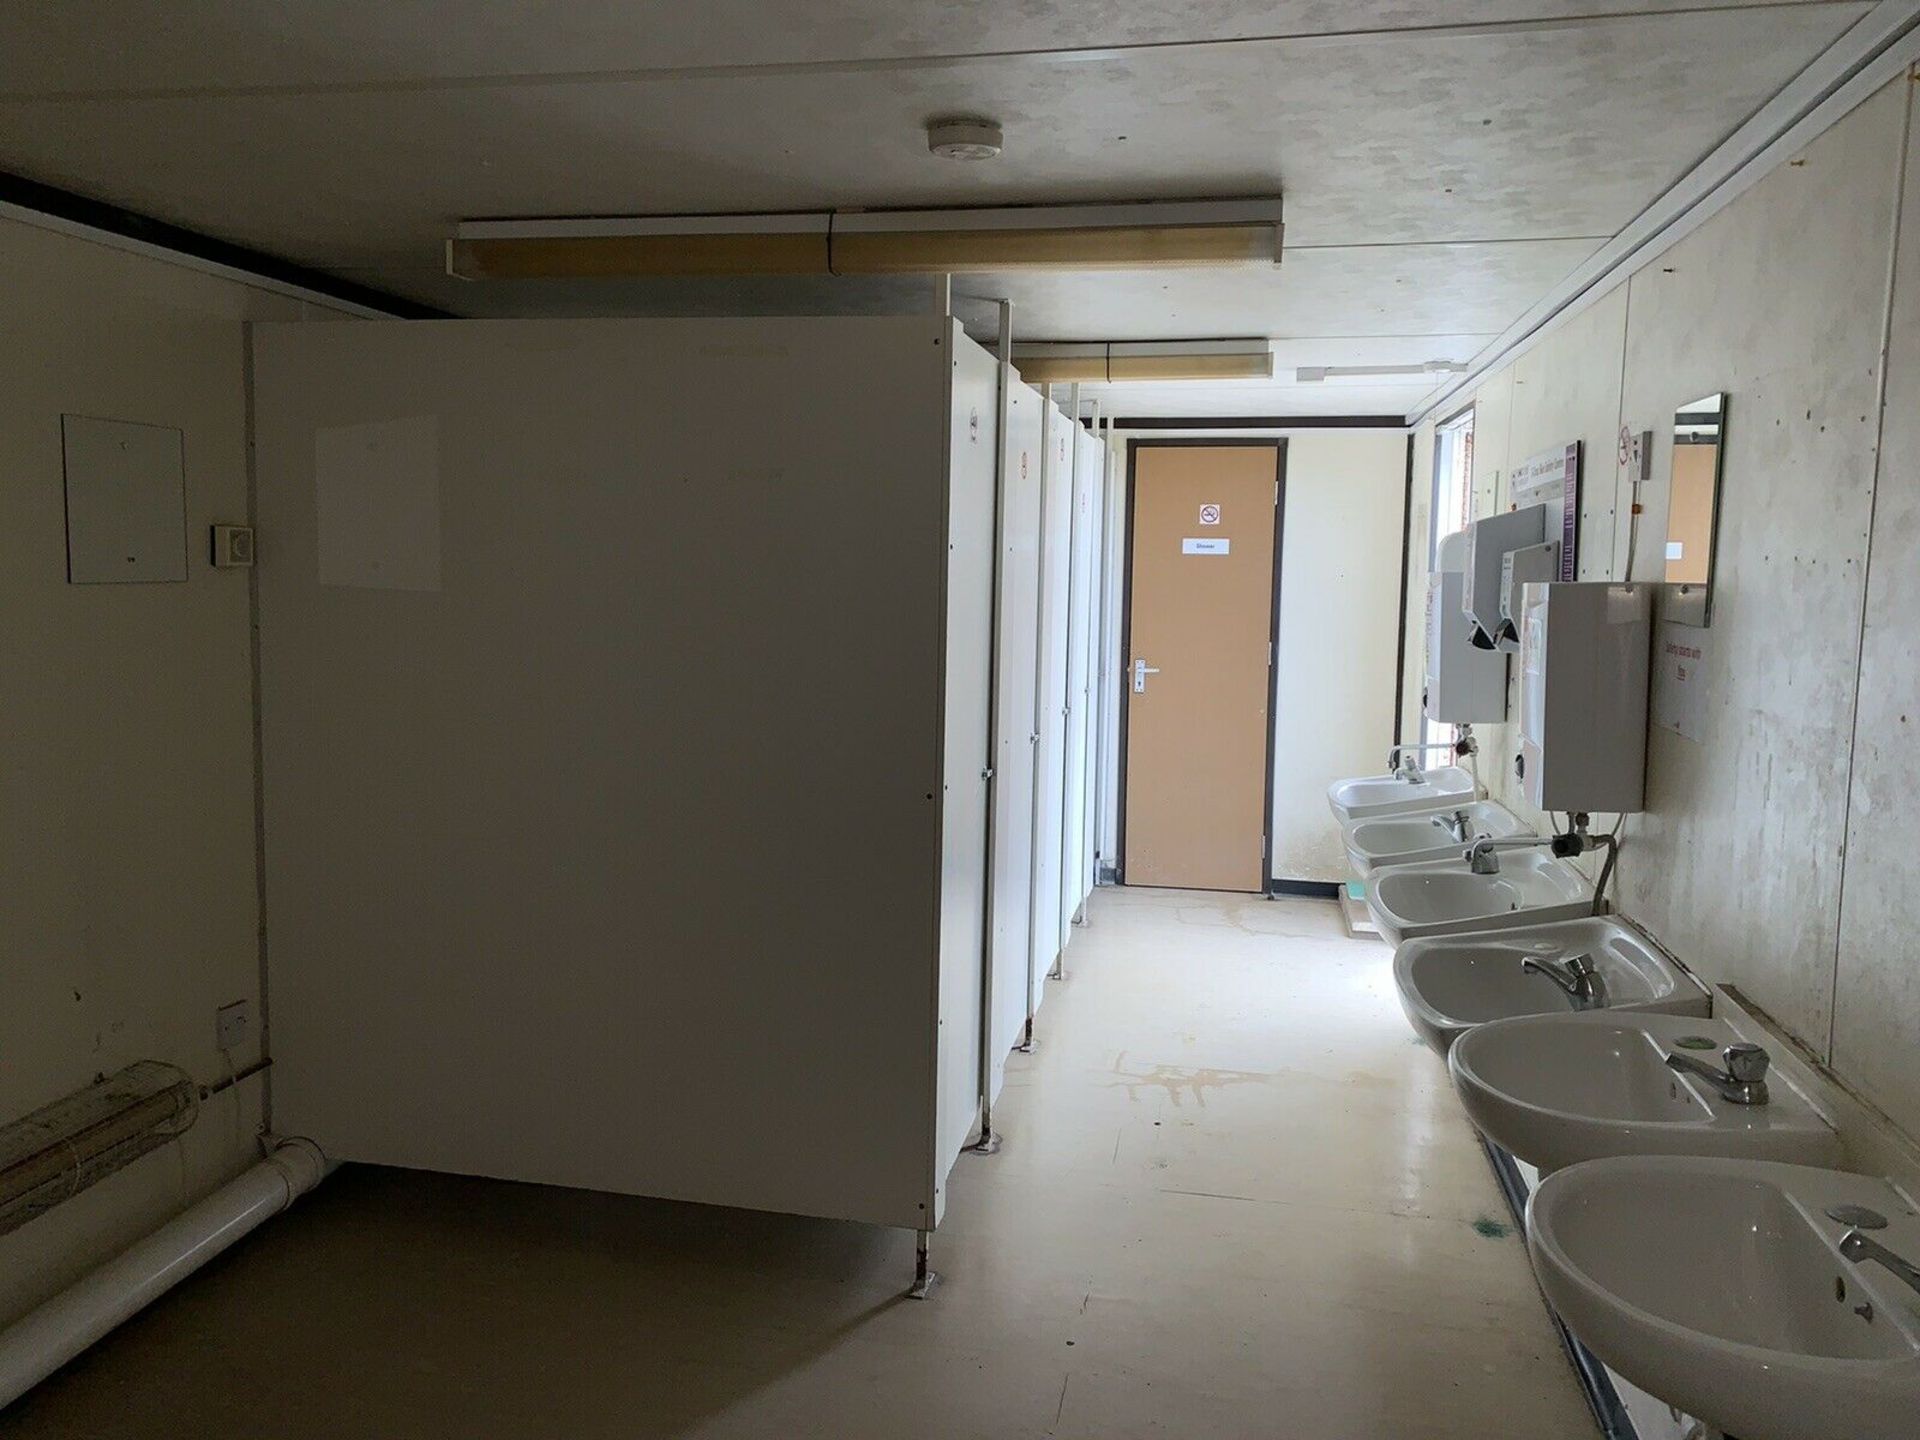 Portable Toilet Block Shower Block Toilet Containe - Image 5 of 12